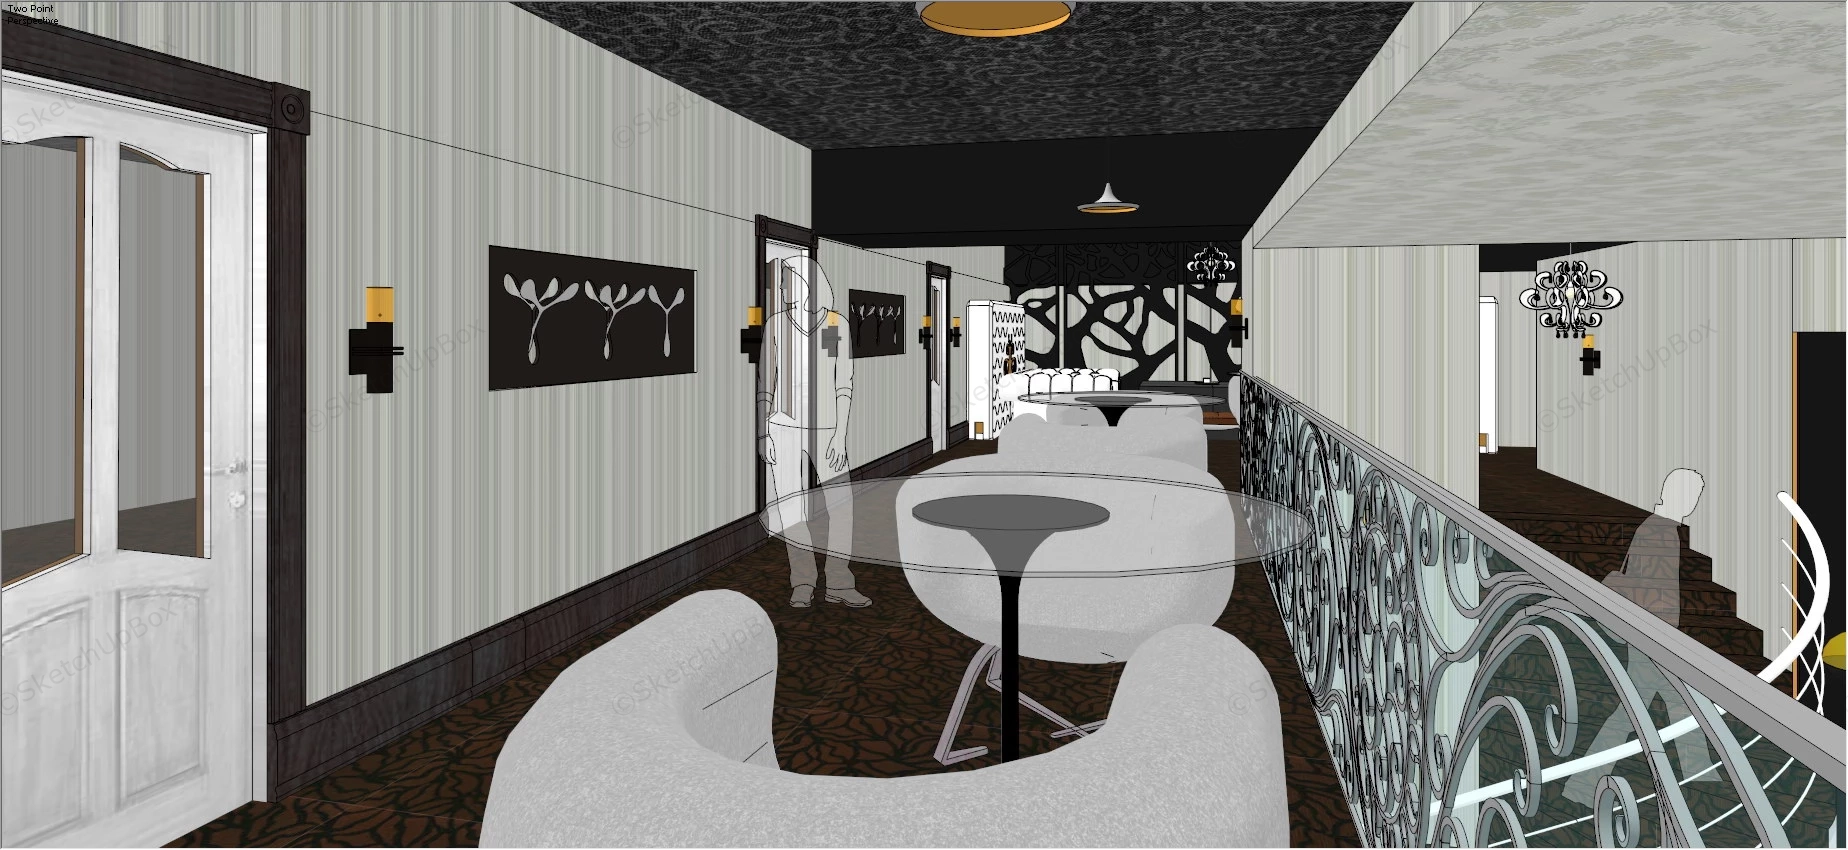 Coffee Bar Interior Design sketchup model preview - SketchupBox